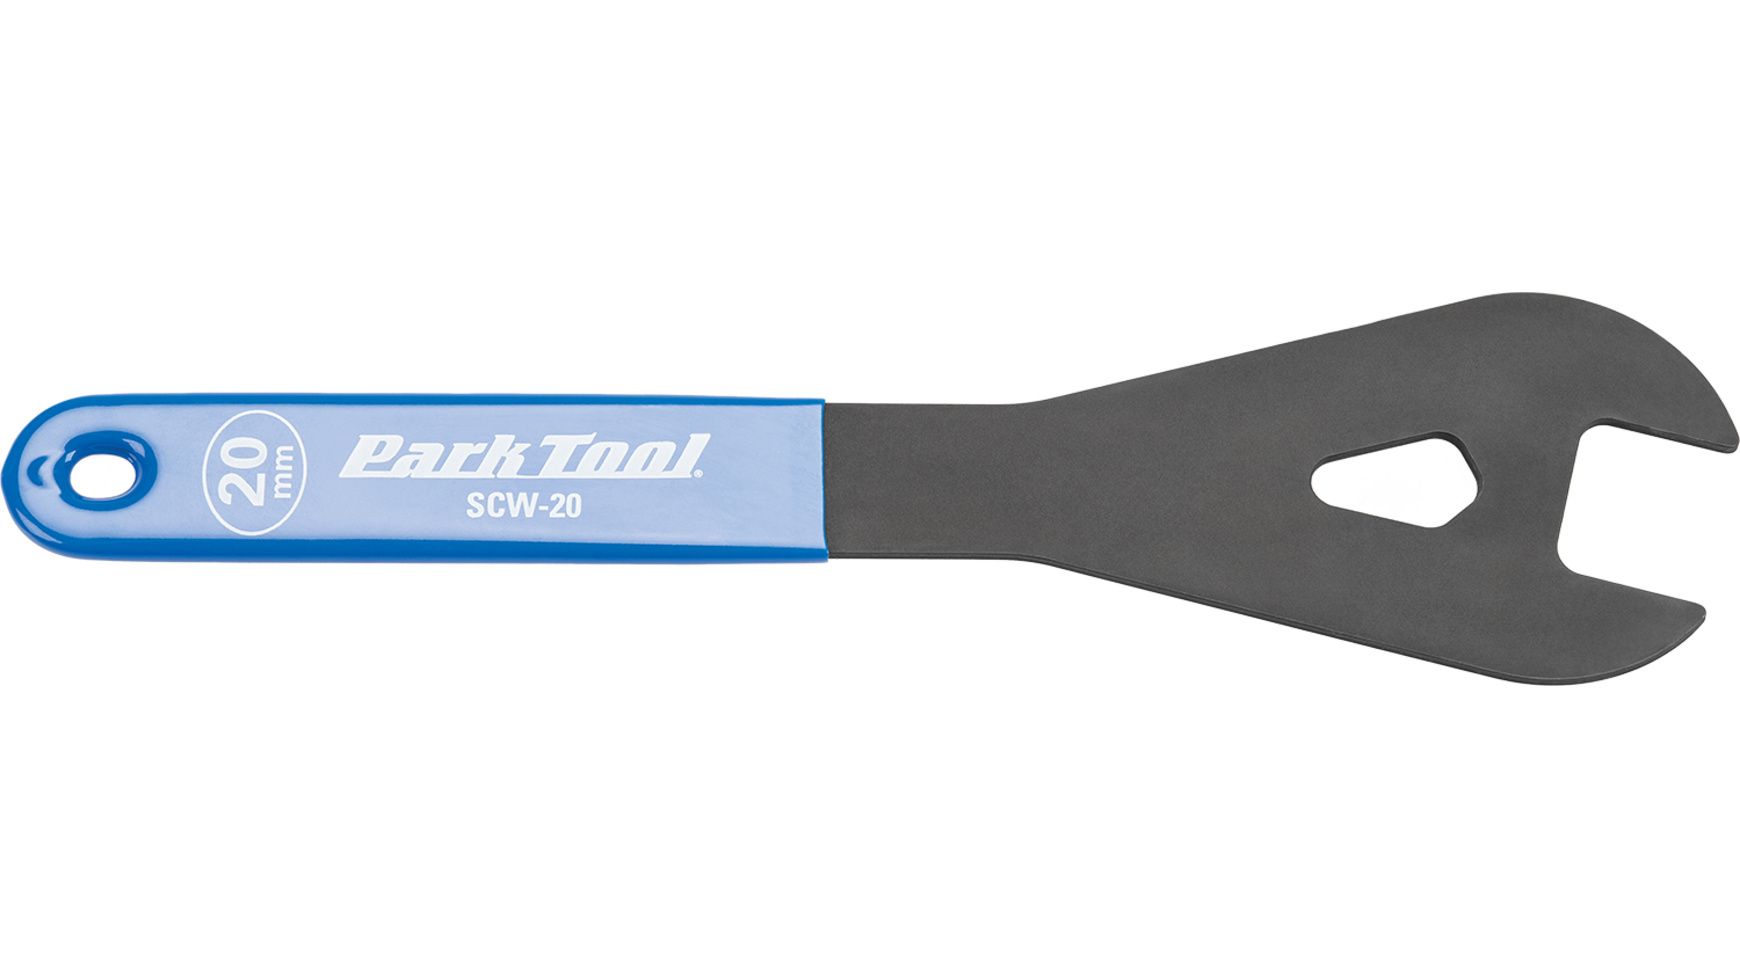 Park Tool SCW-20 Konusschlüssel 20mm - Liquid-Life #Wähle Deine Farbe_blau